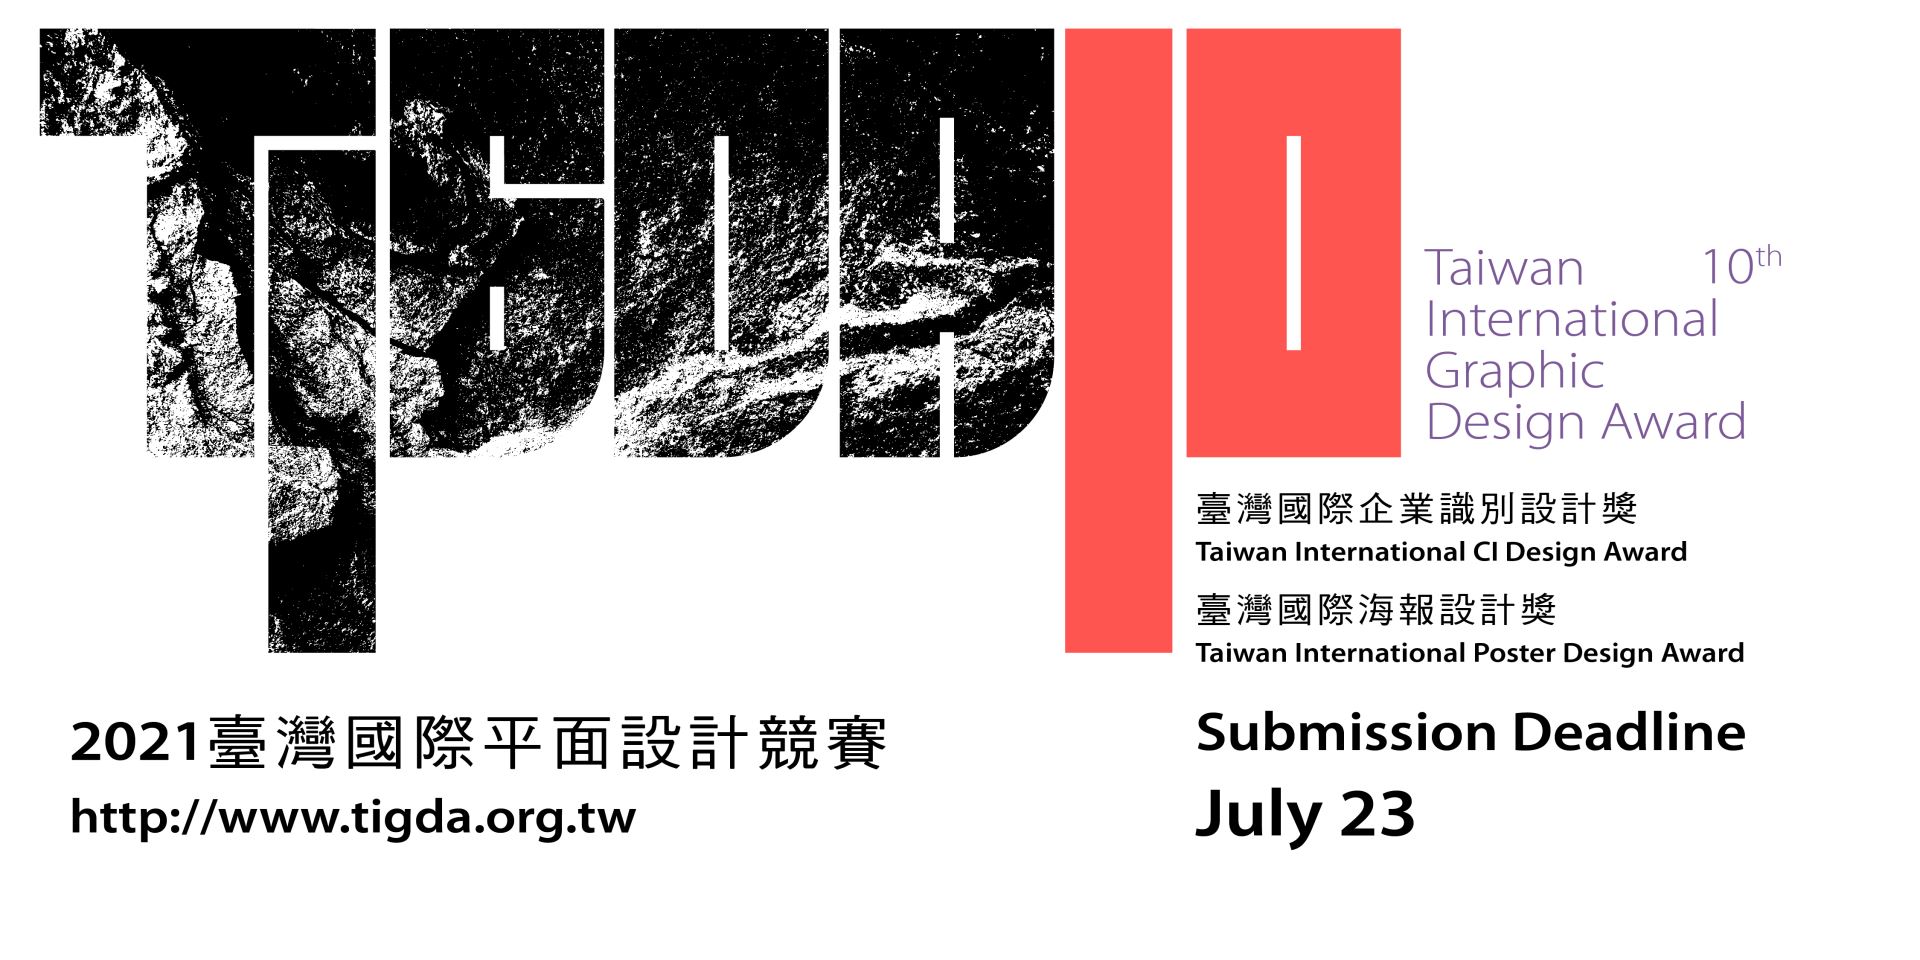 Taiwan International Graphic Design Award 2021